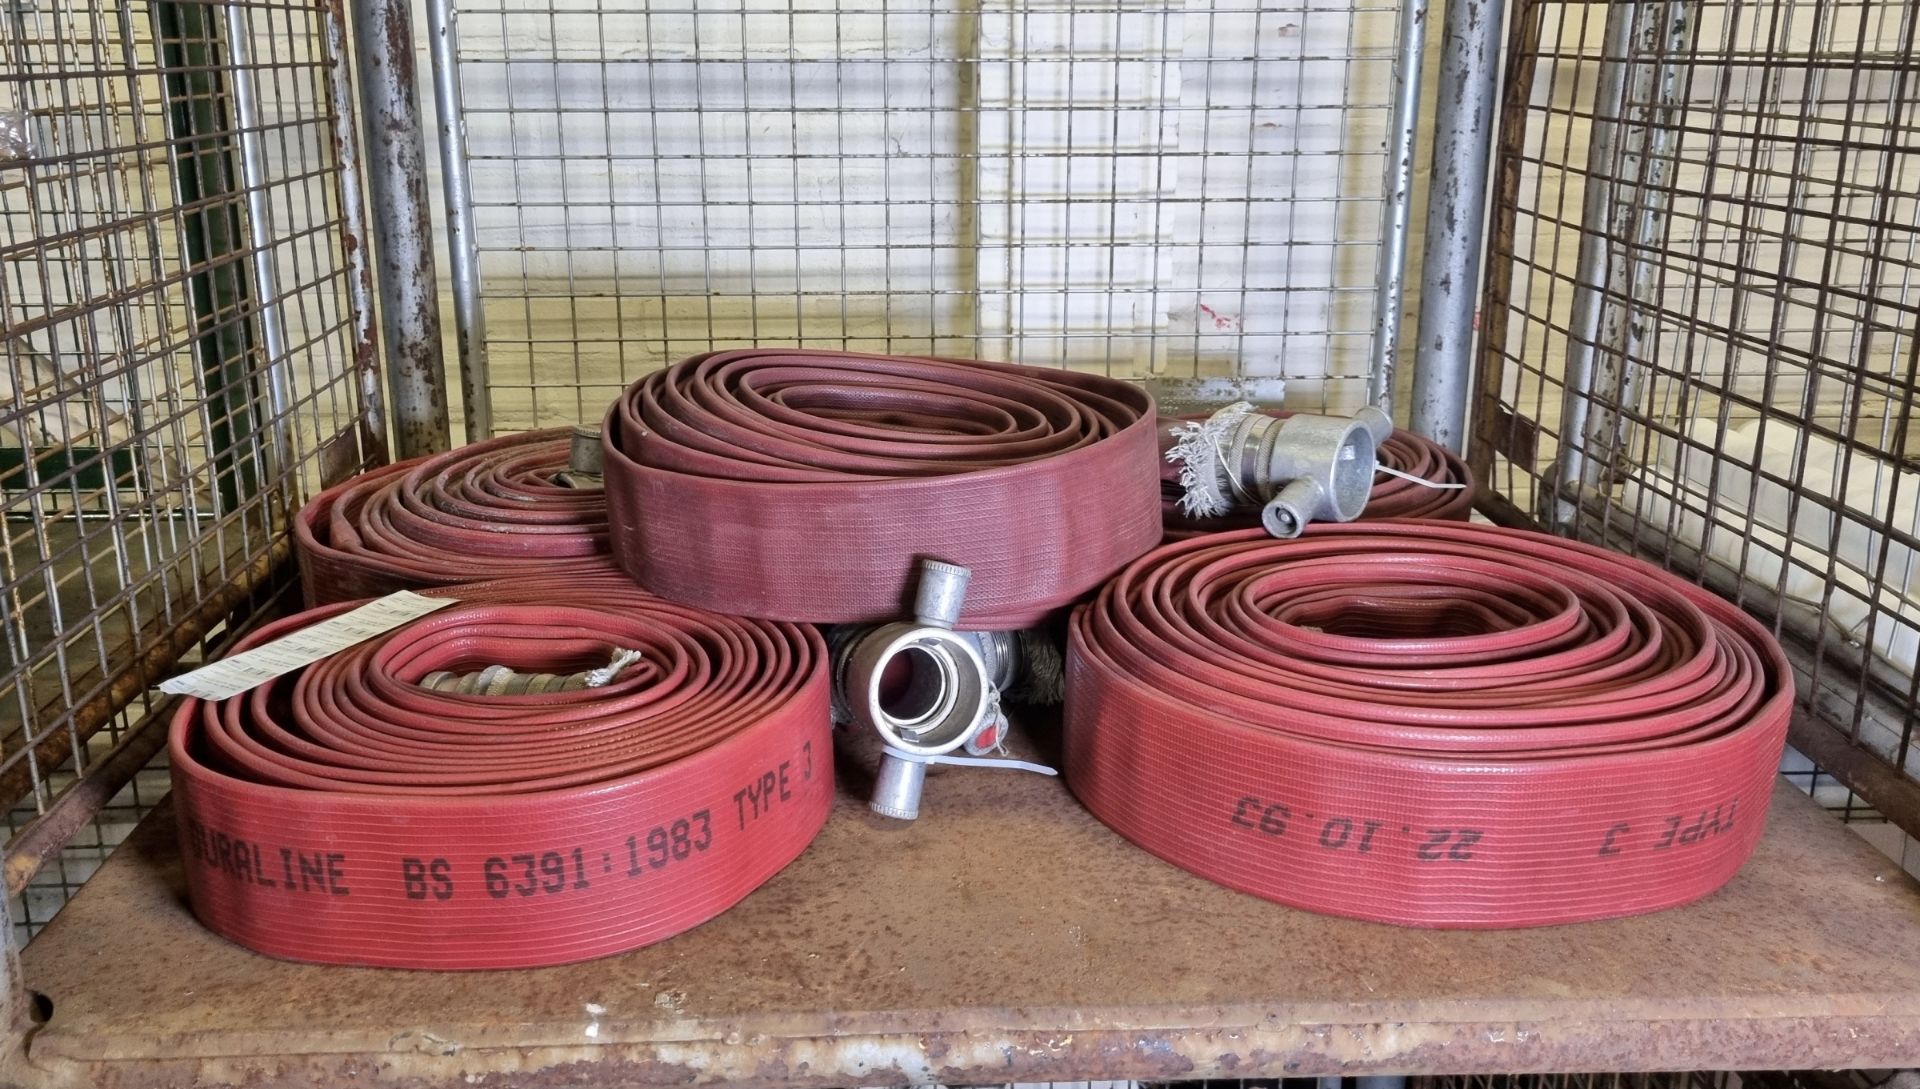 5x Red layflat fire hose - 70mm diameter, approx 20m length